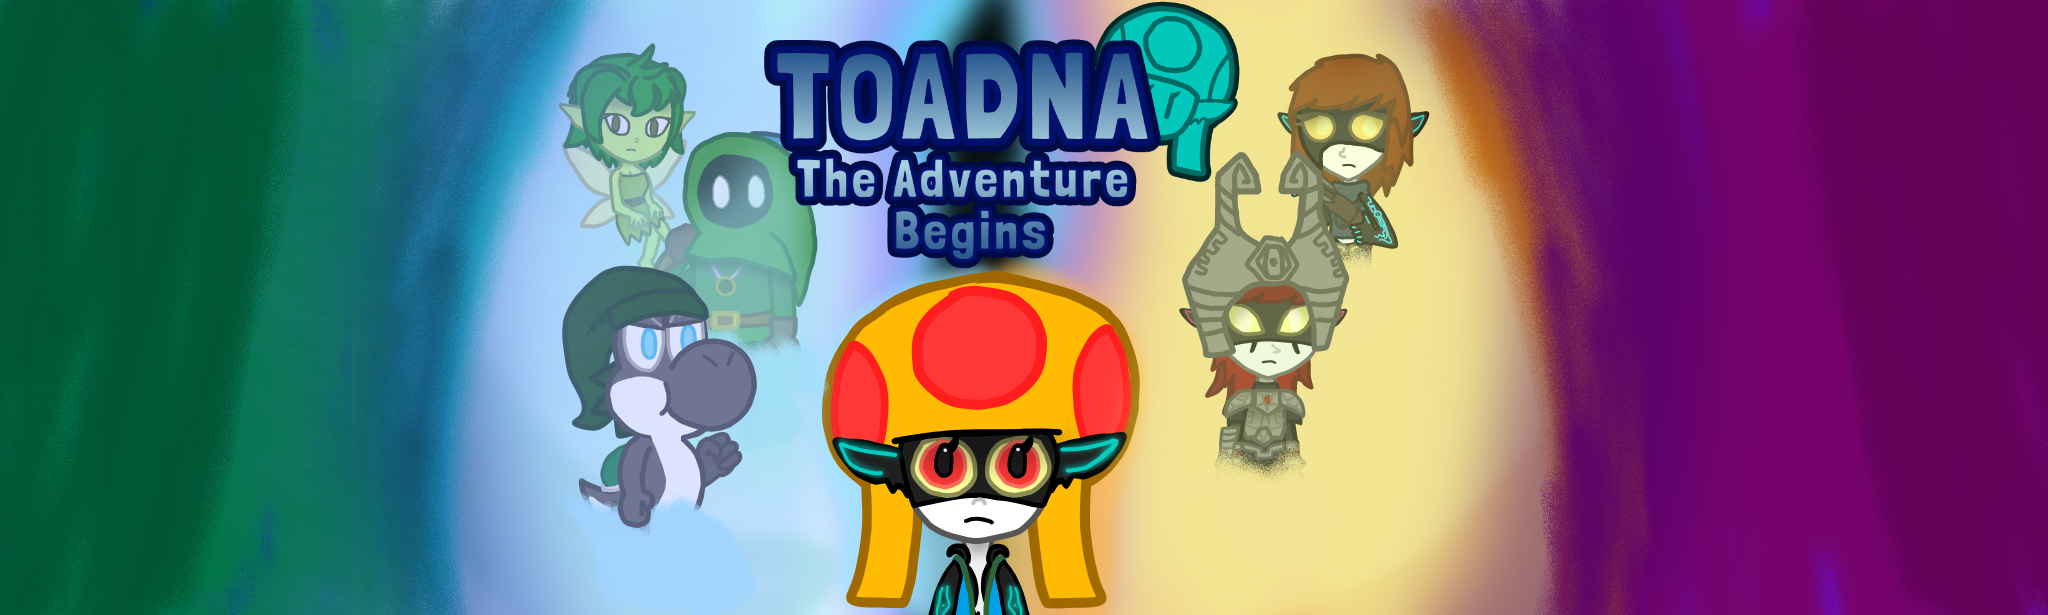 Toadna: The Adventure Begins